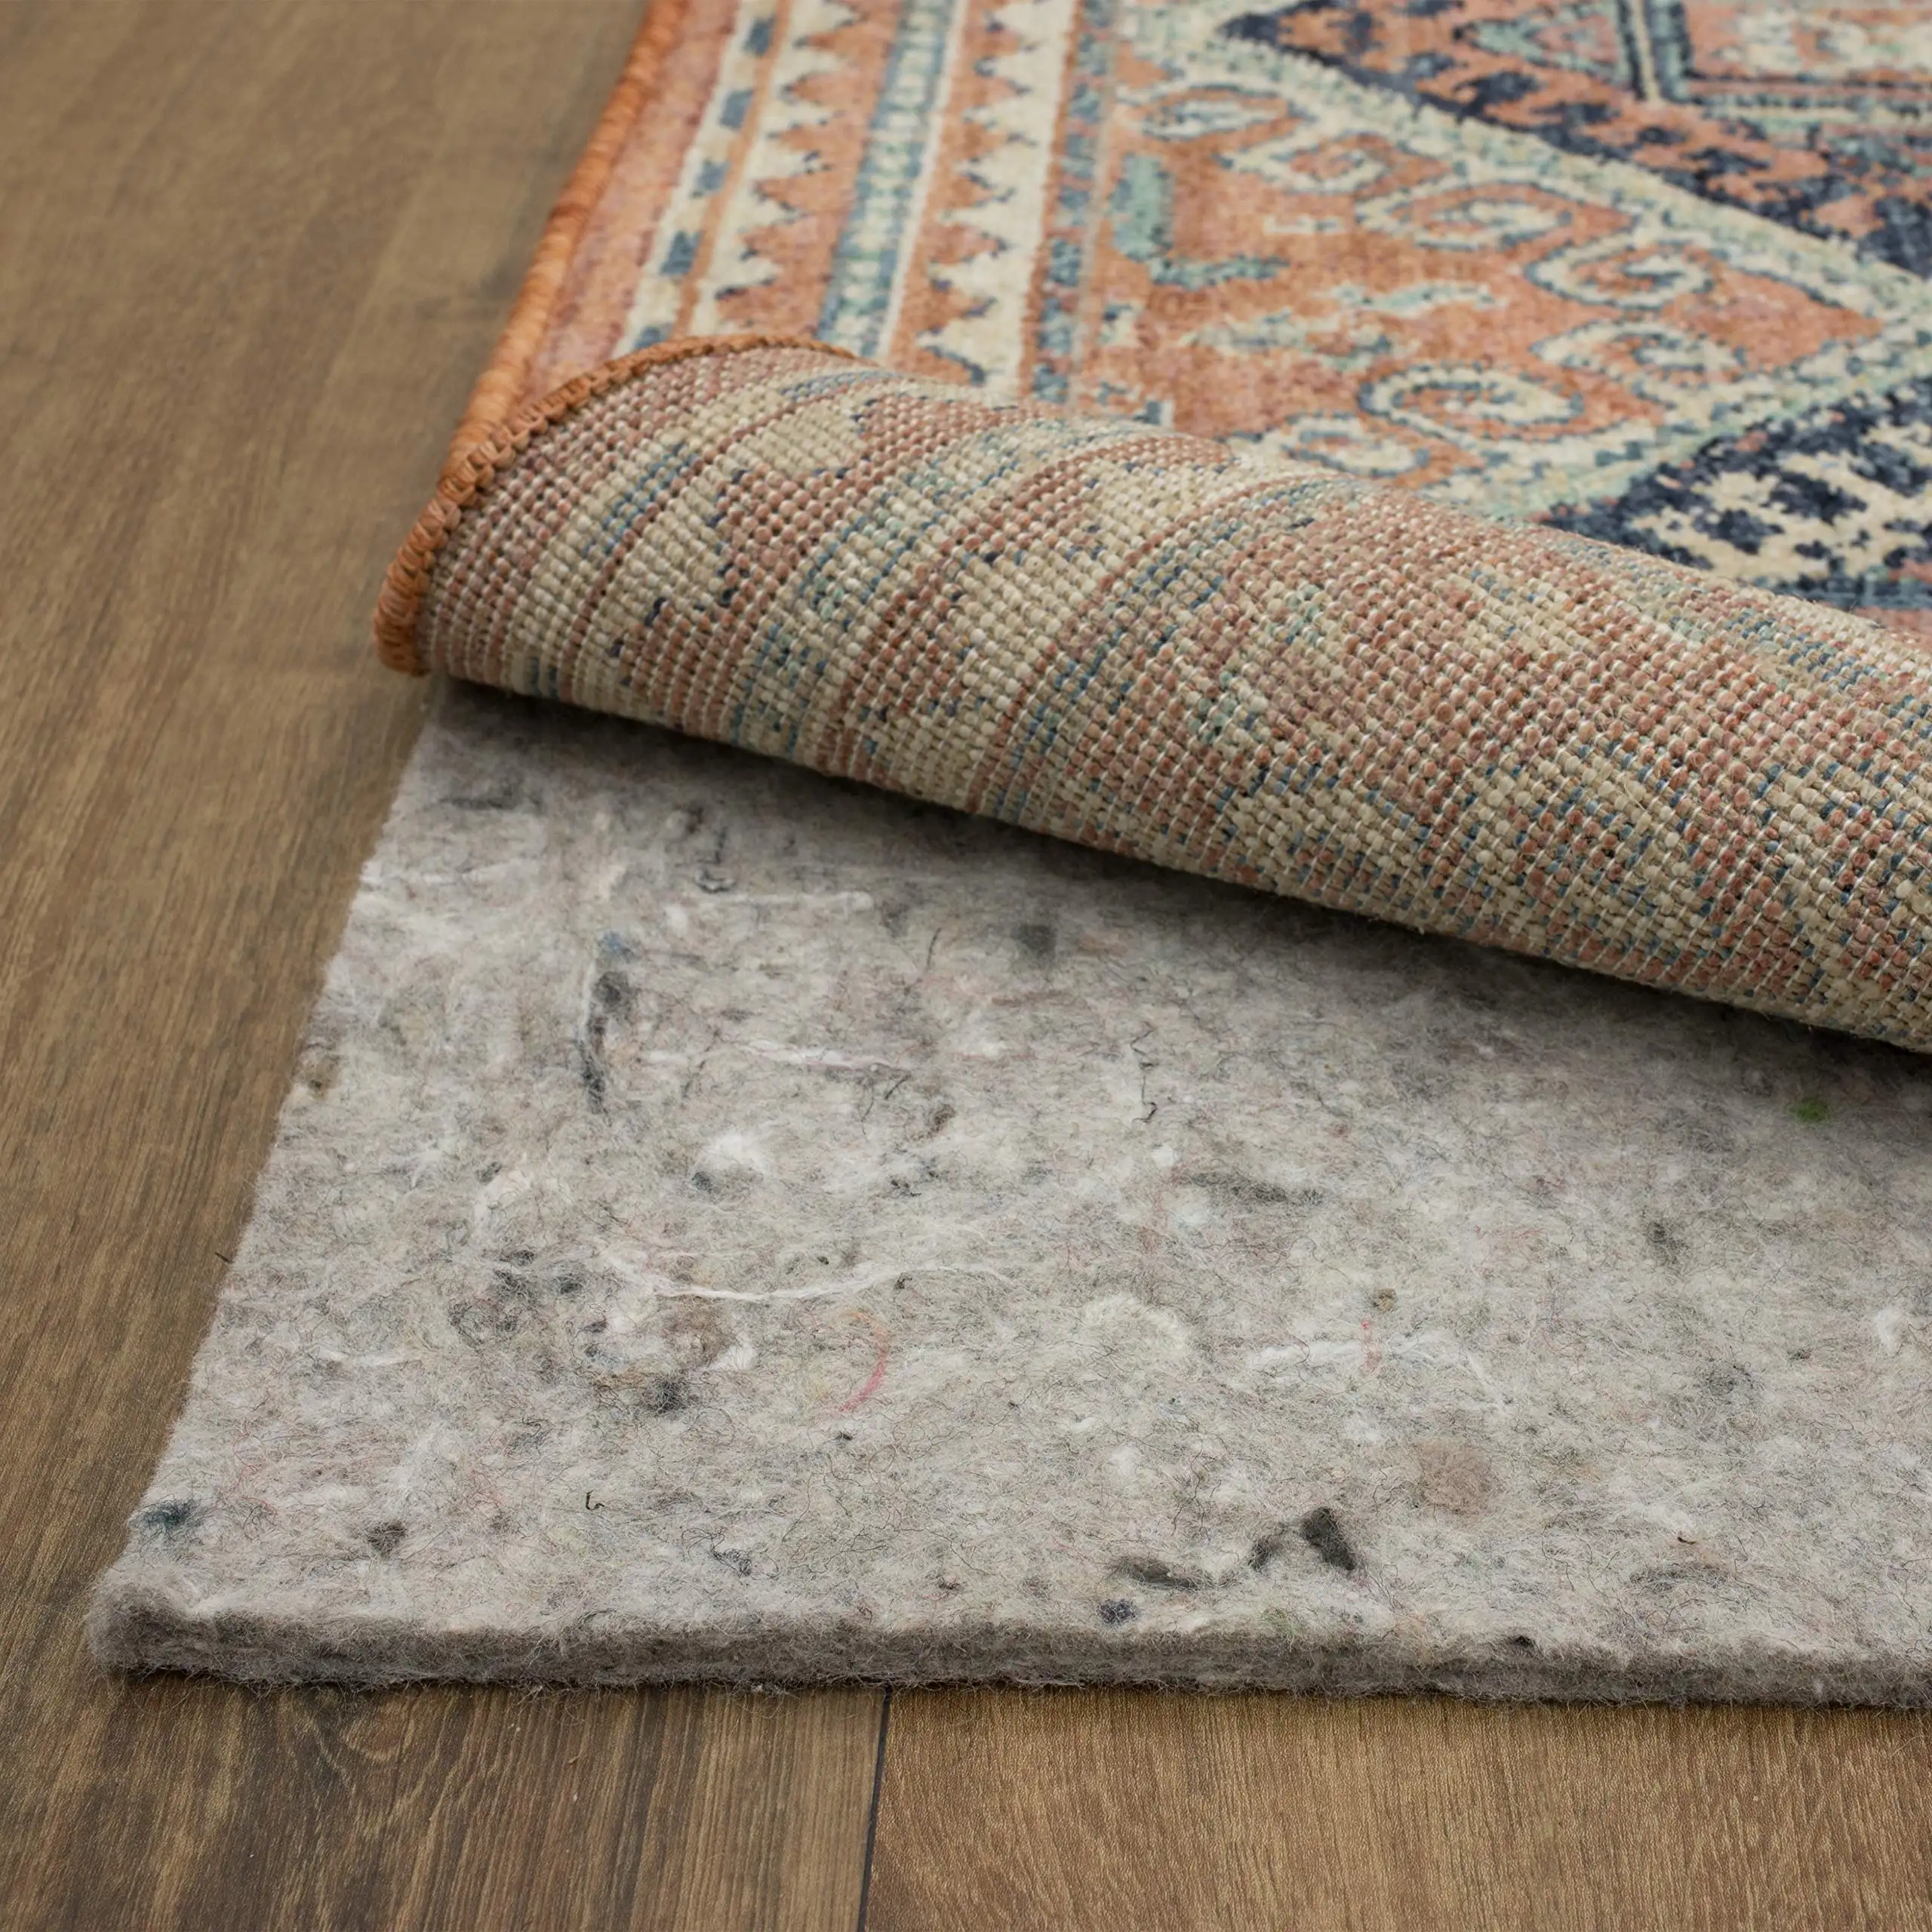 Area rug pad carpet felt rubber bottom pad anti slip underlay with non-slip backing